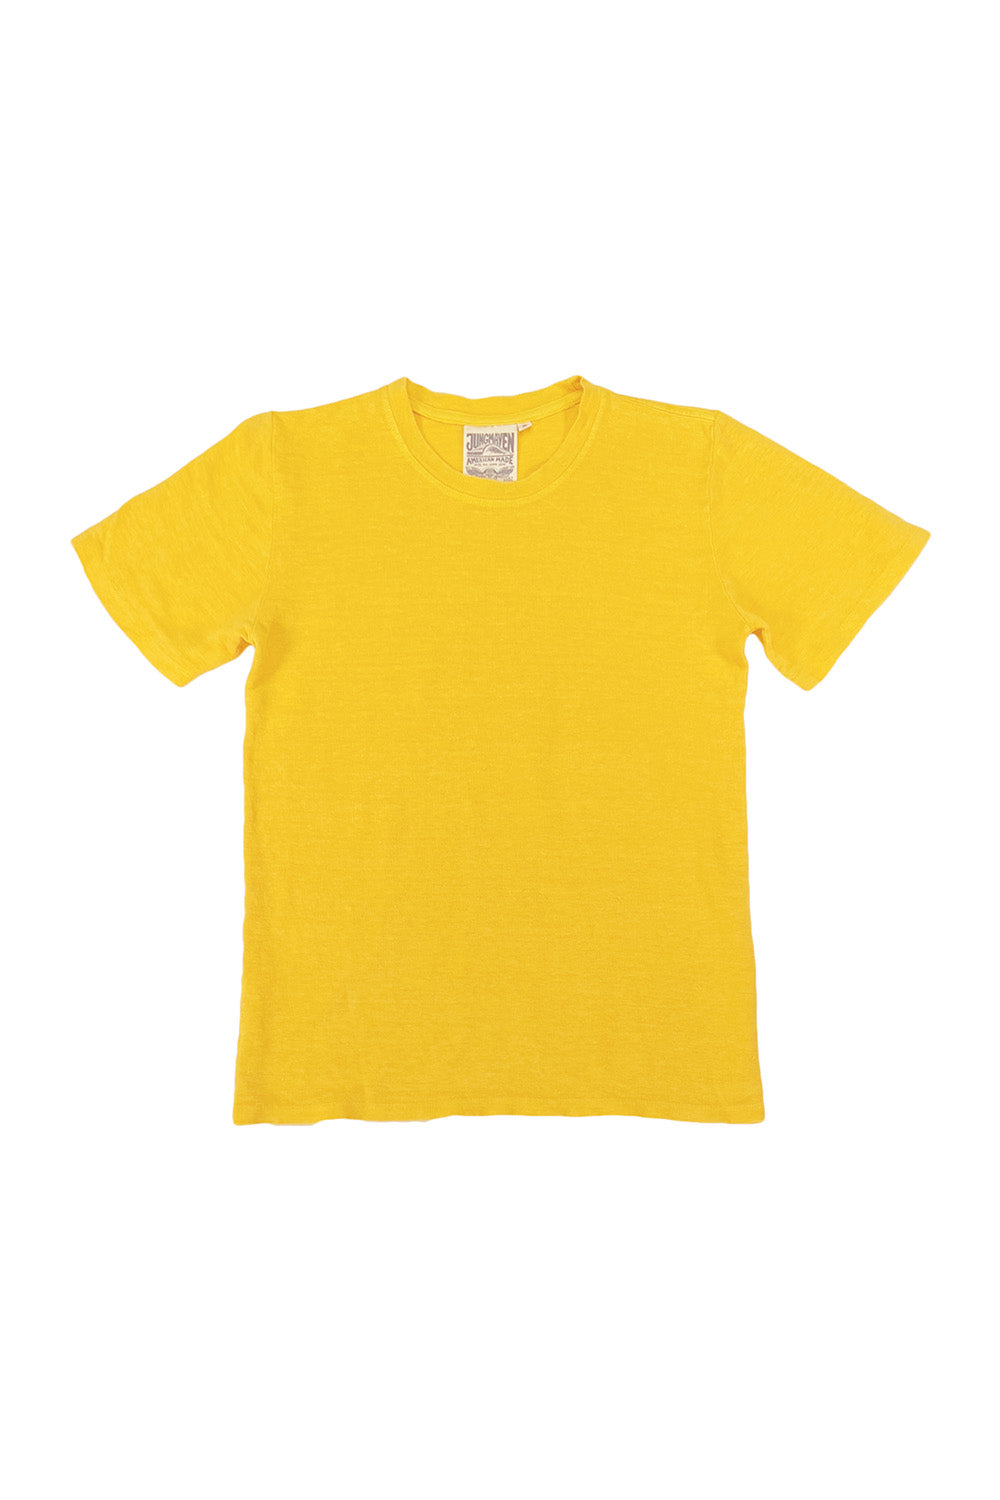 Mana 10 - 100% Hemp Tee | Jungmaven Hemp Clothing & Accessories / Color: Sunshine Yellow